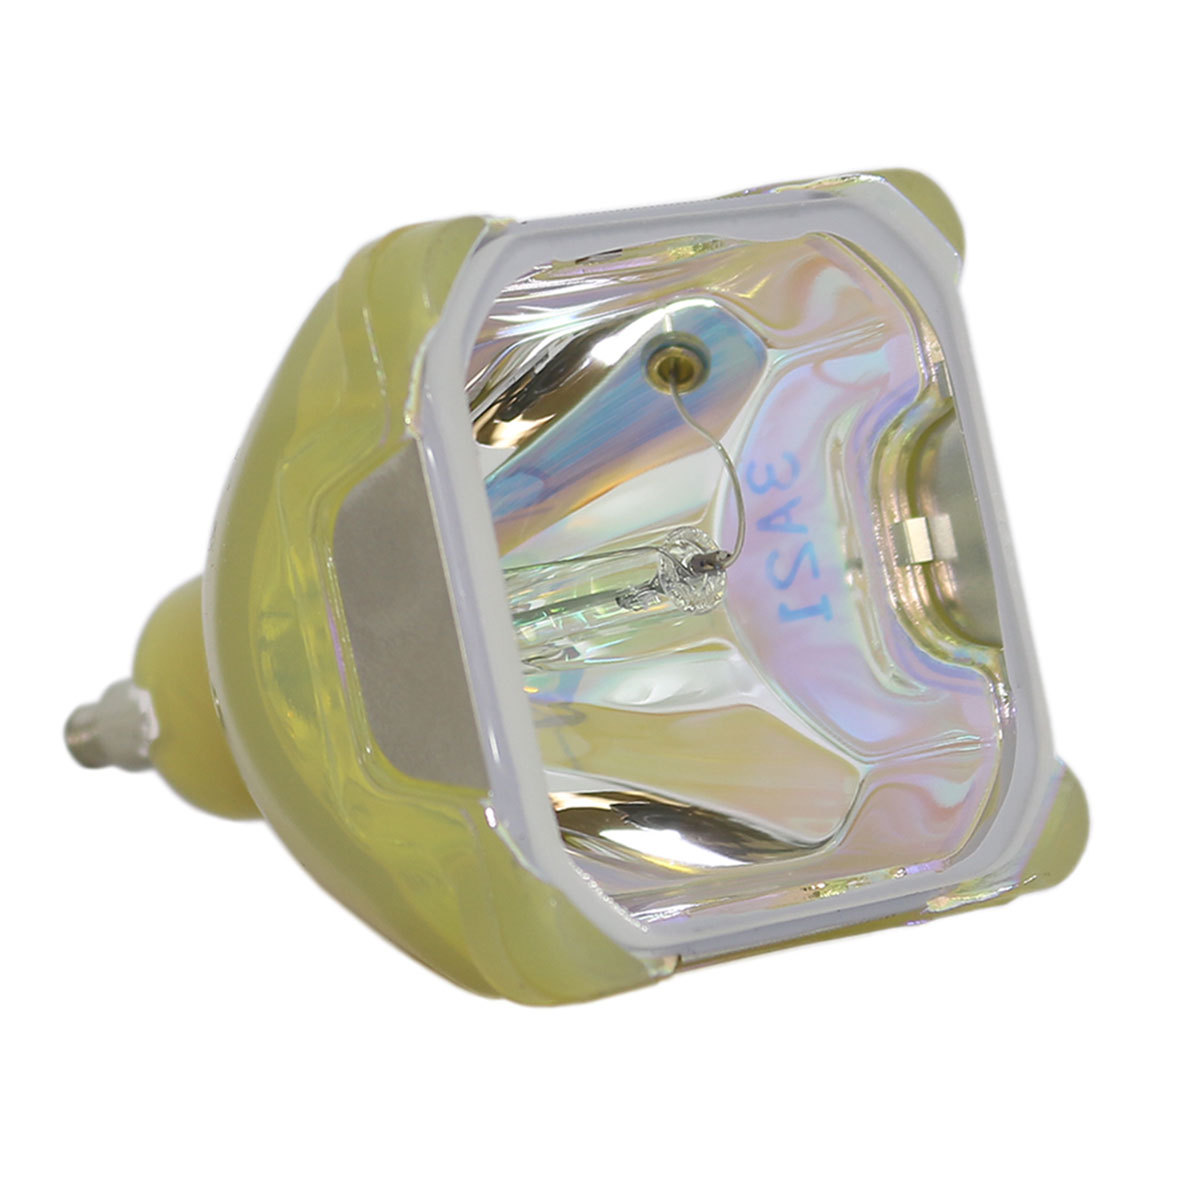 Viewsonic RLC-150-003 OEM Projector Bare Lamp - $189.00